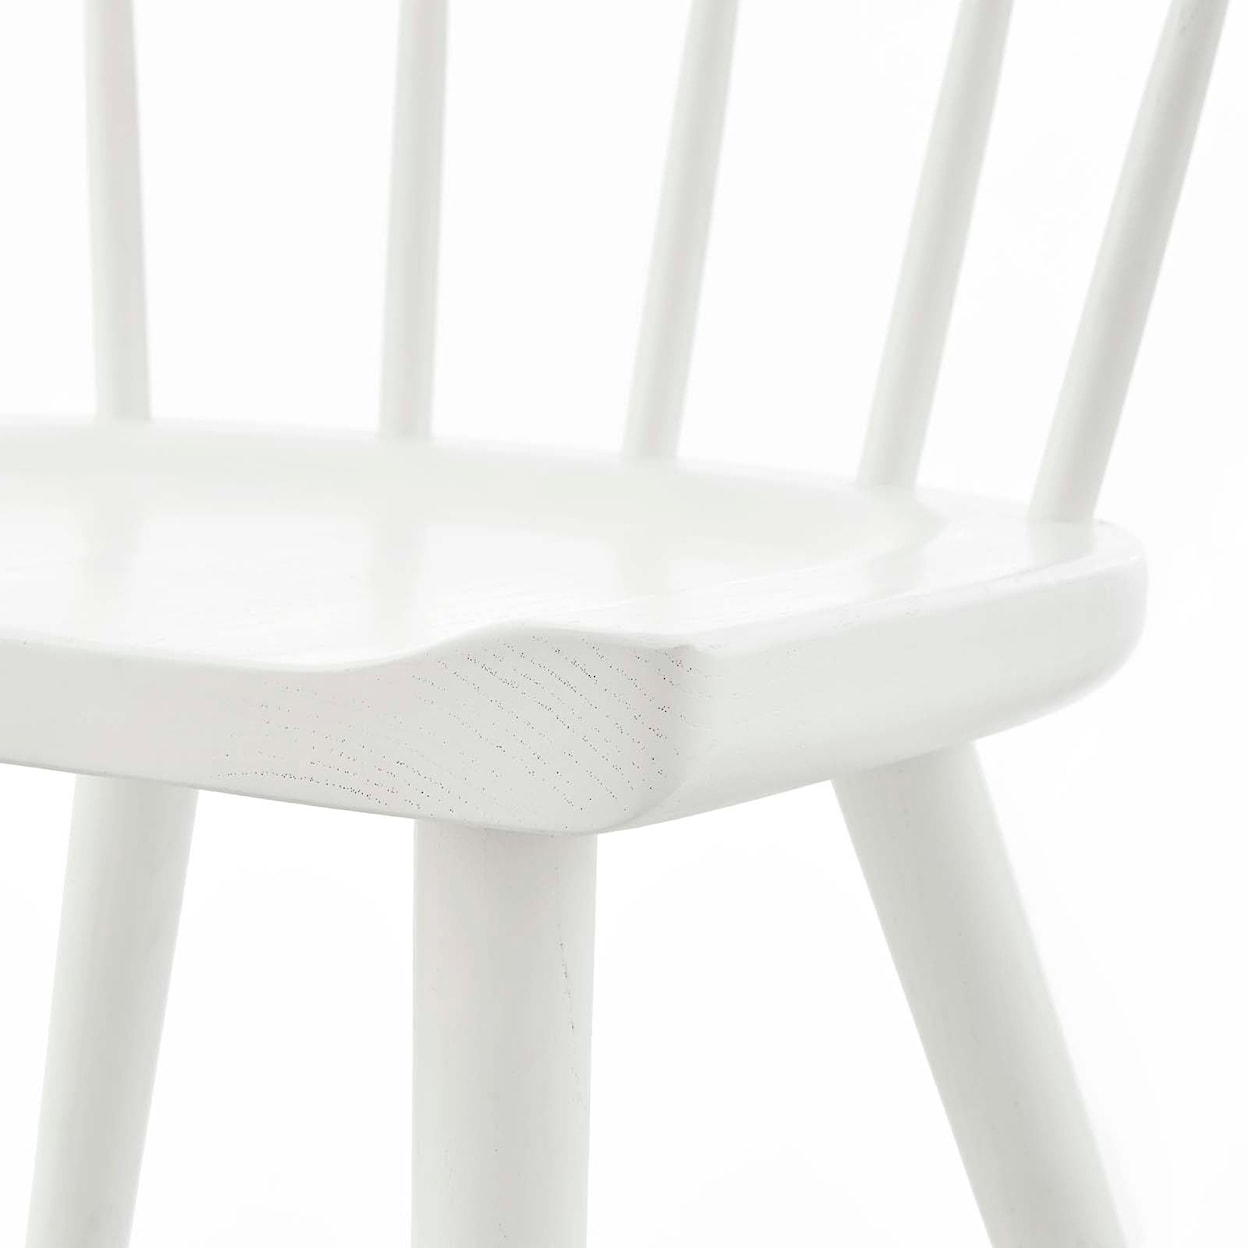 Modway Sutter Sutter Wood Dining Side Chair